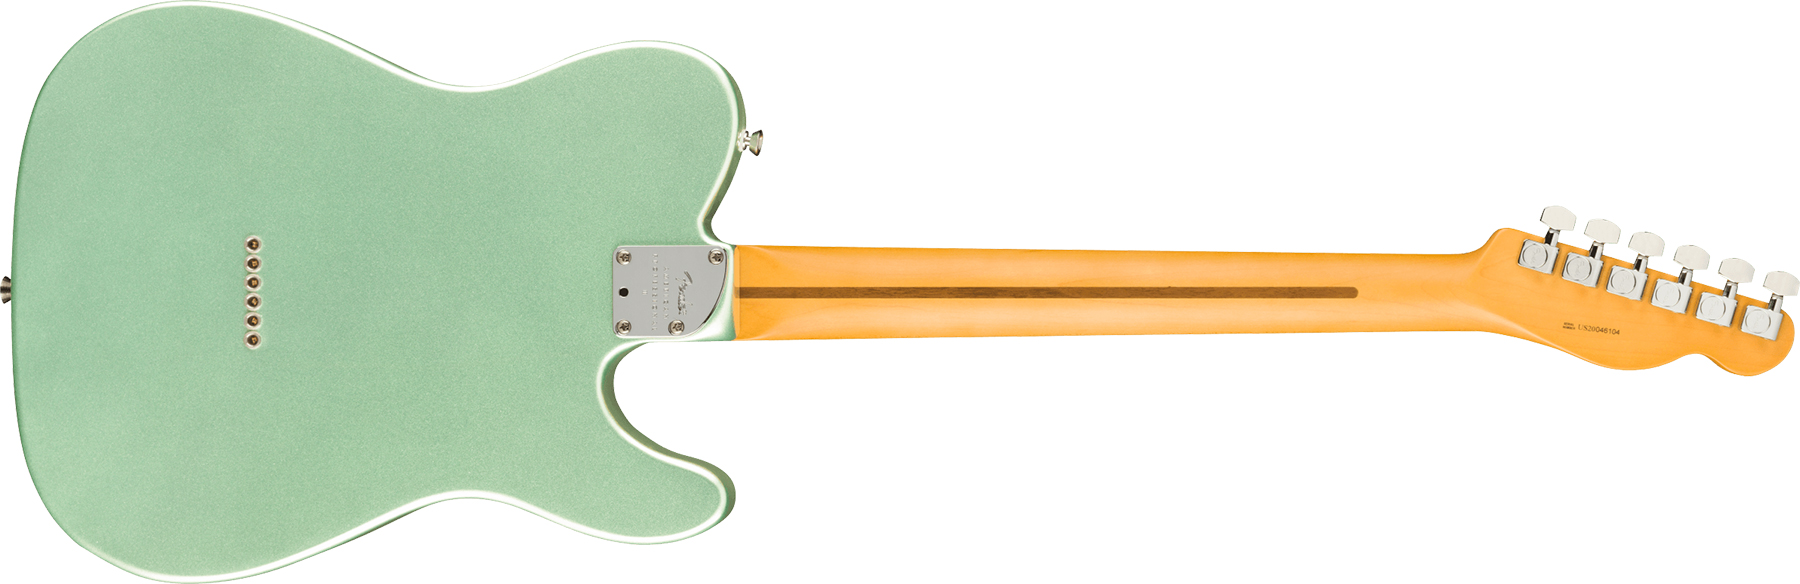 Fender Tele American Professional Ii Lh Gaucher Usa Mn - Mystic Surf Green - Left-handed electric guitar - Variation 1